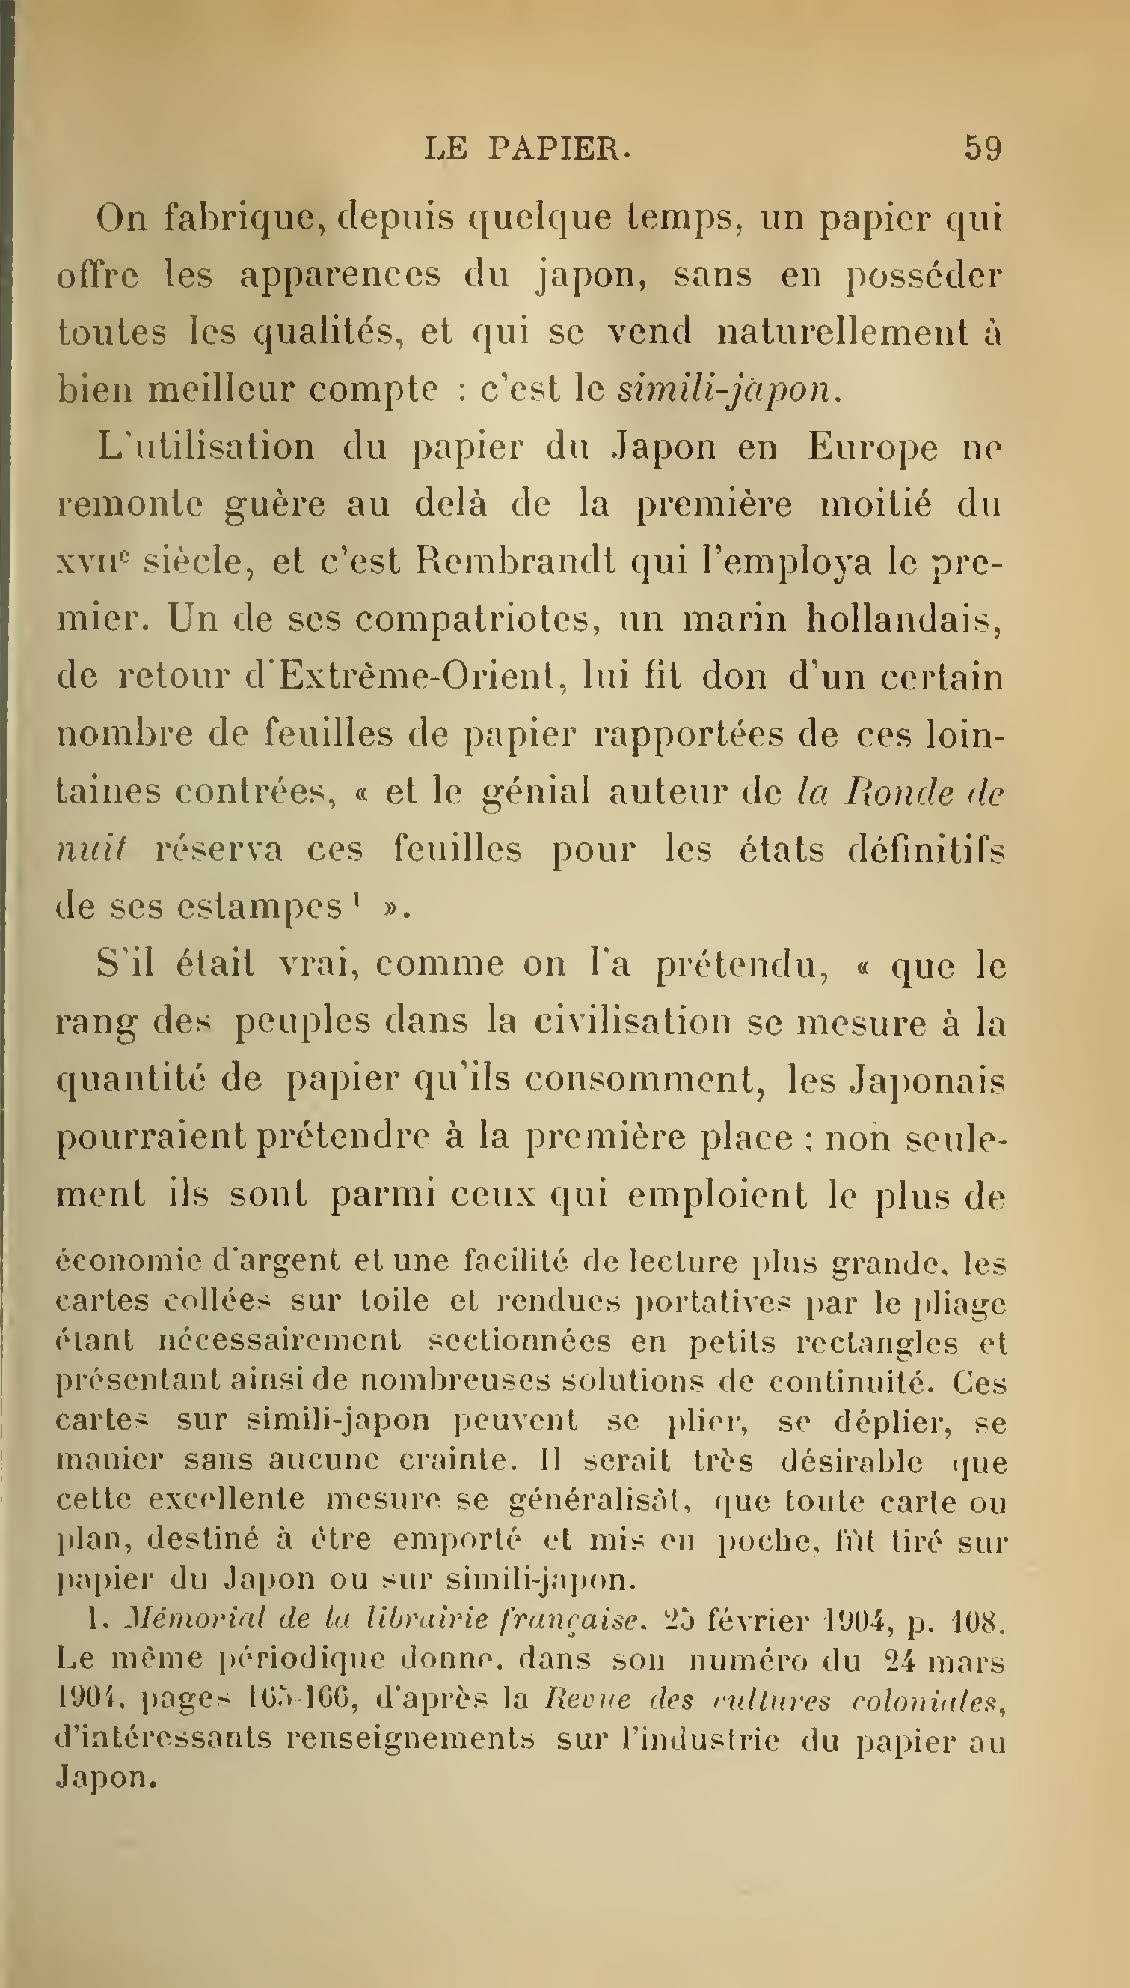 Albert Cim, Le Livre, t. III, p. 59.